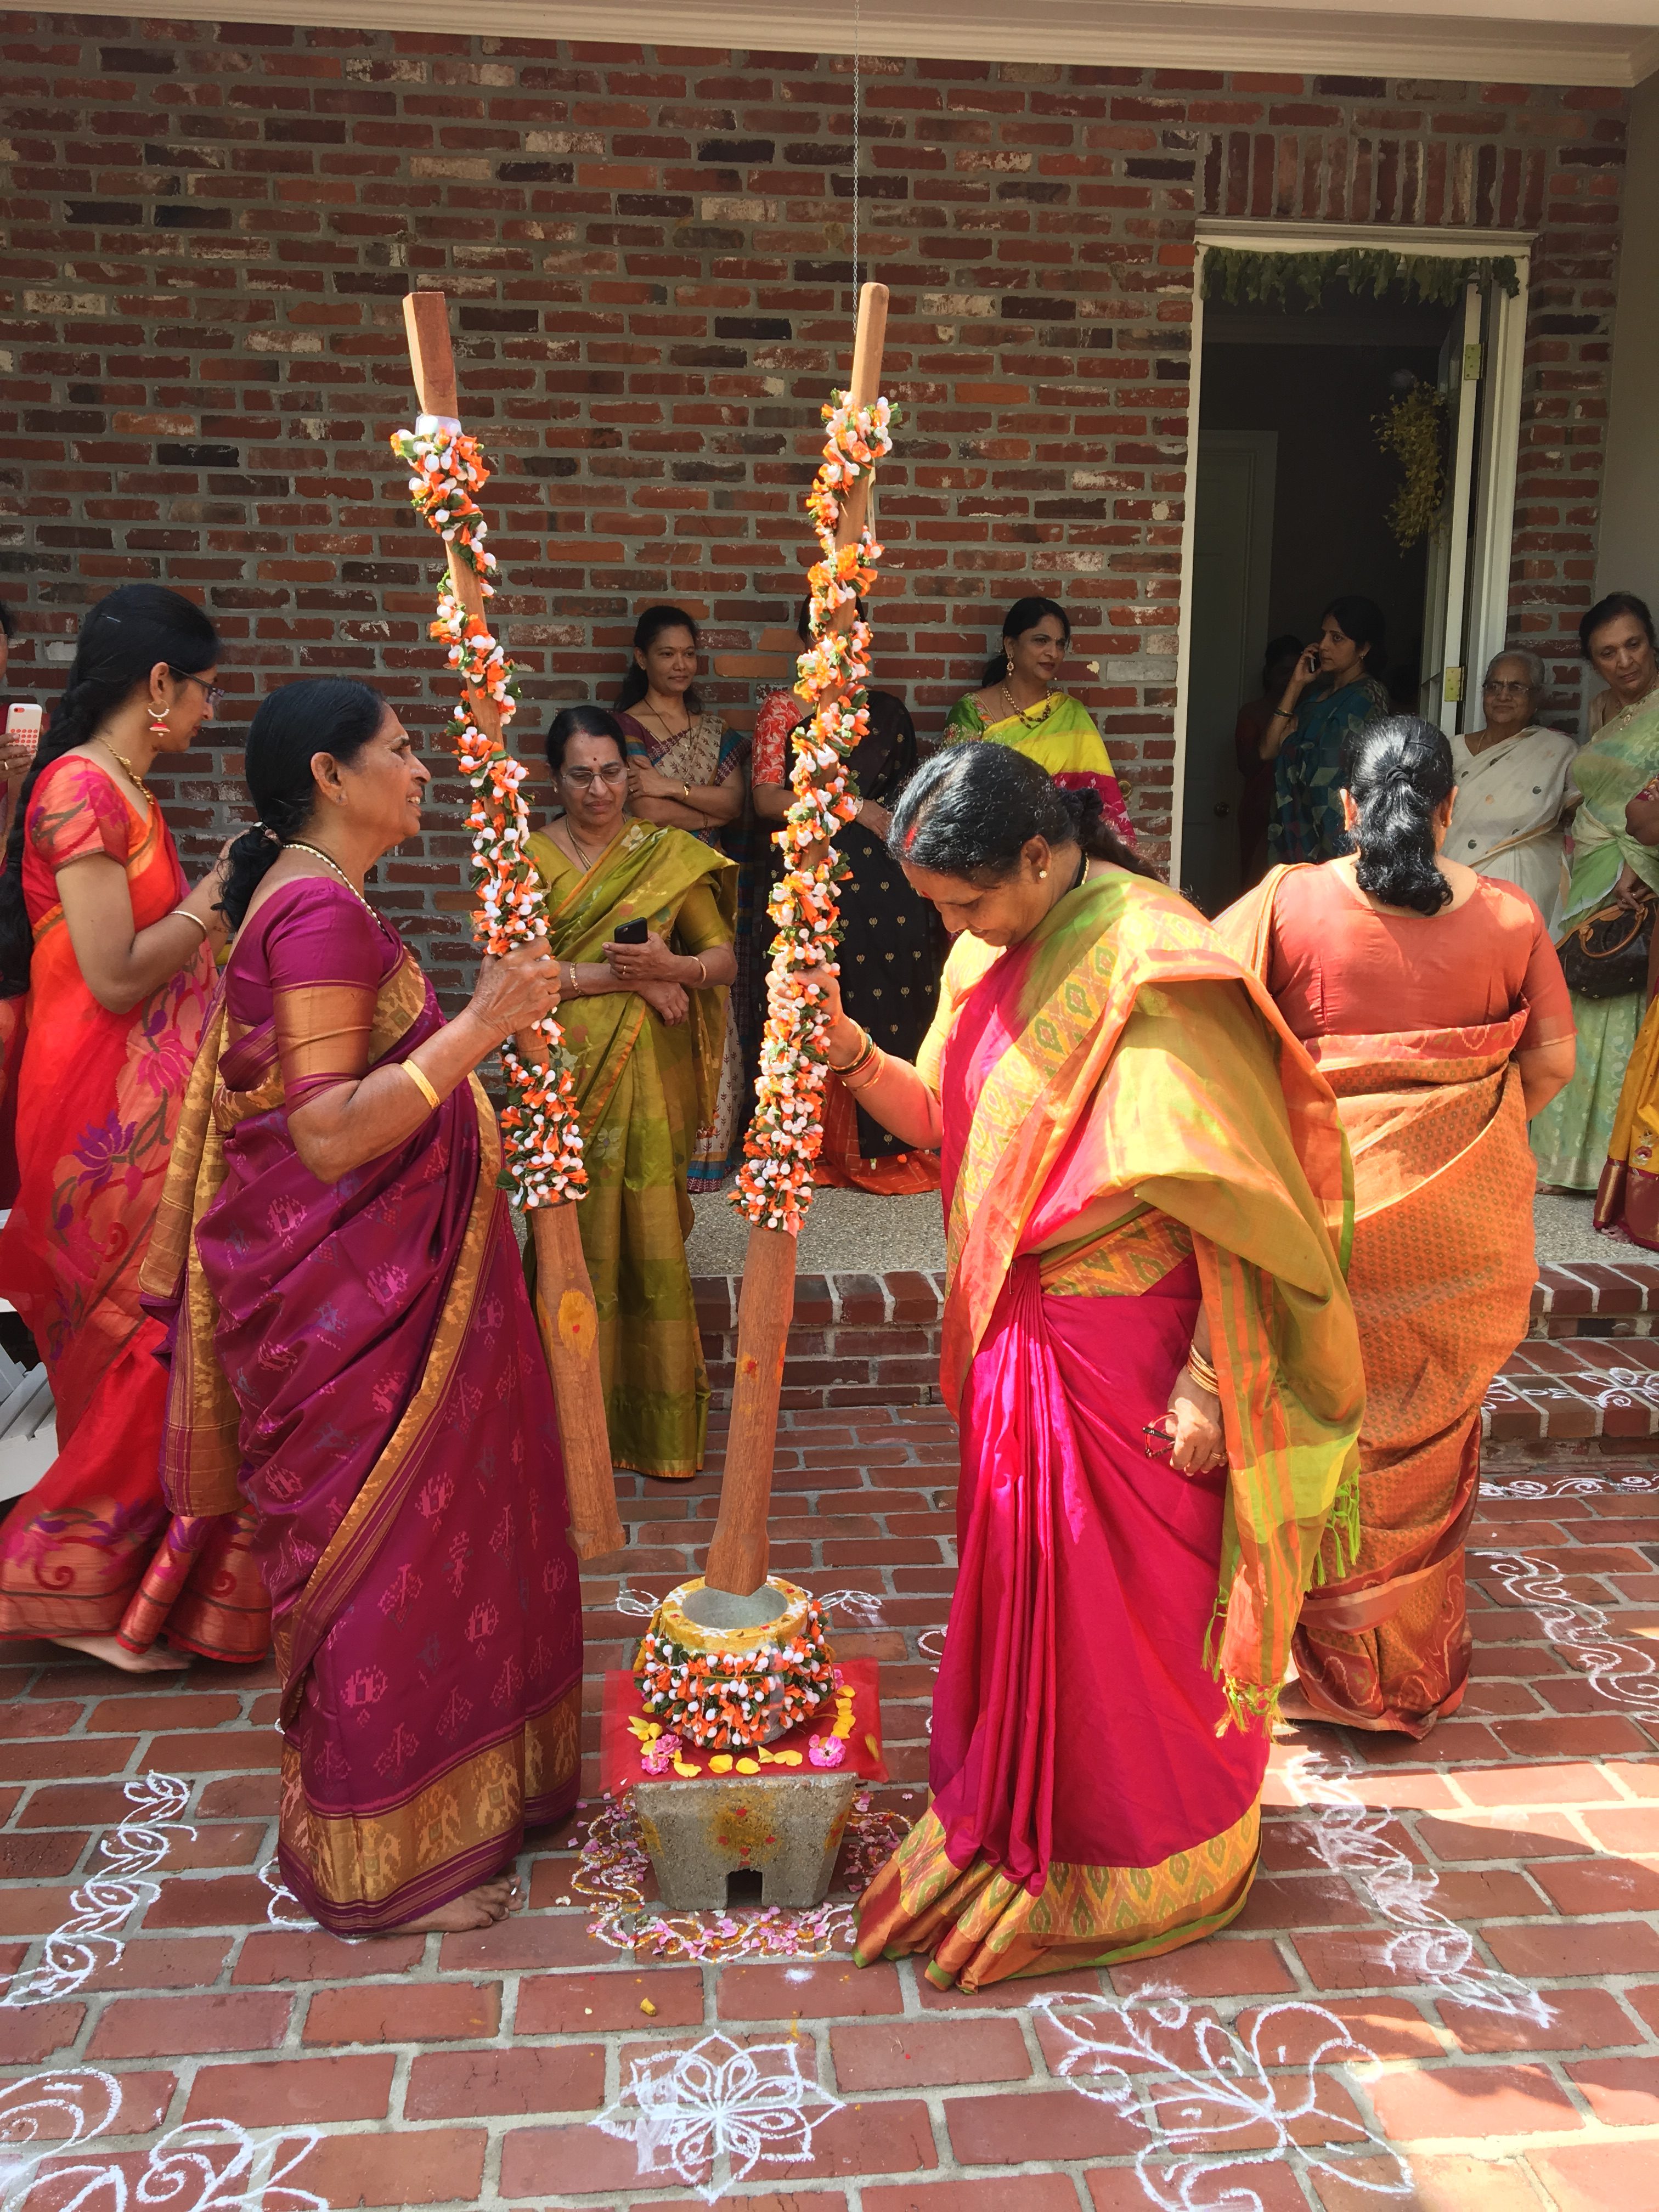 meghana chalasani walter james steves sanskrit ceremony inregister